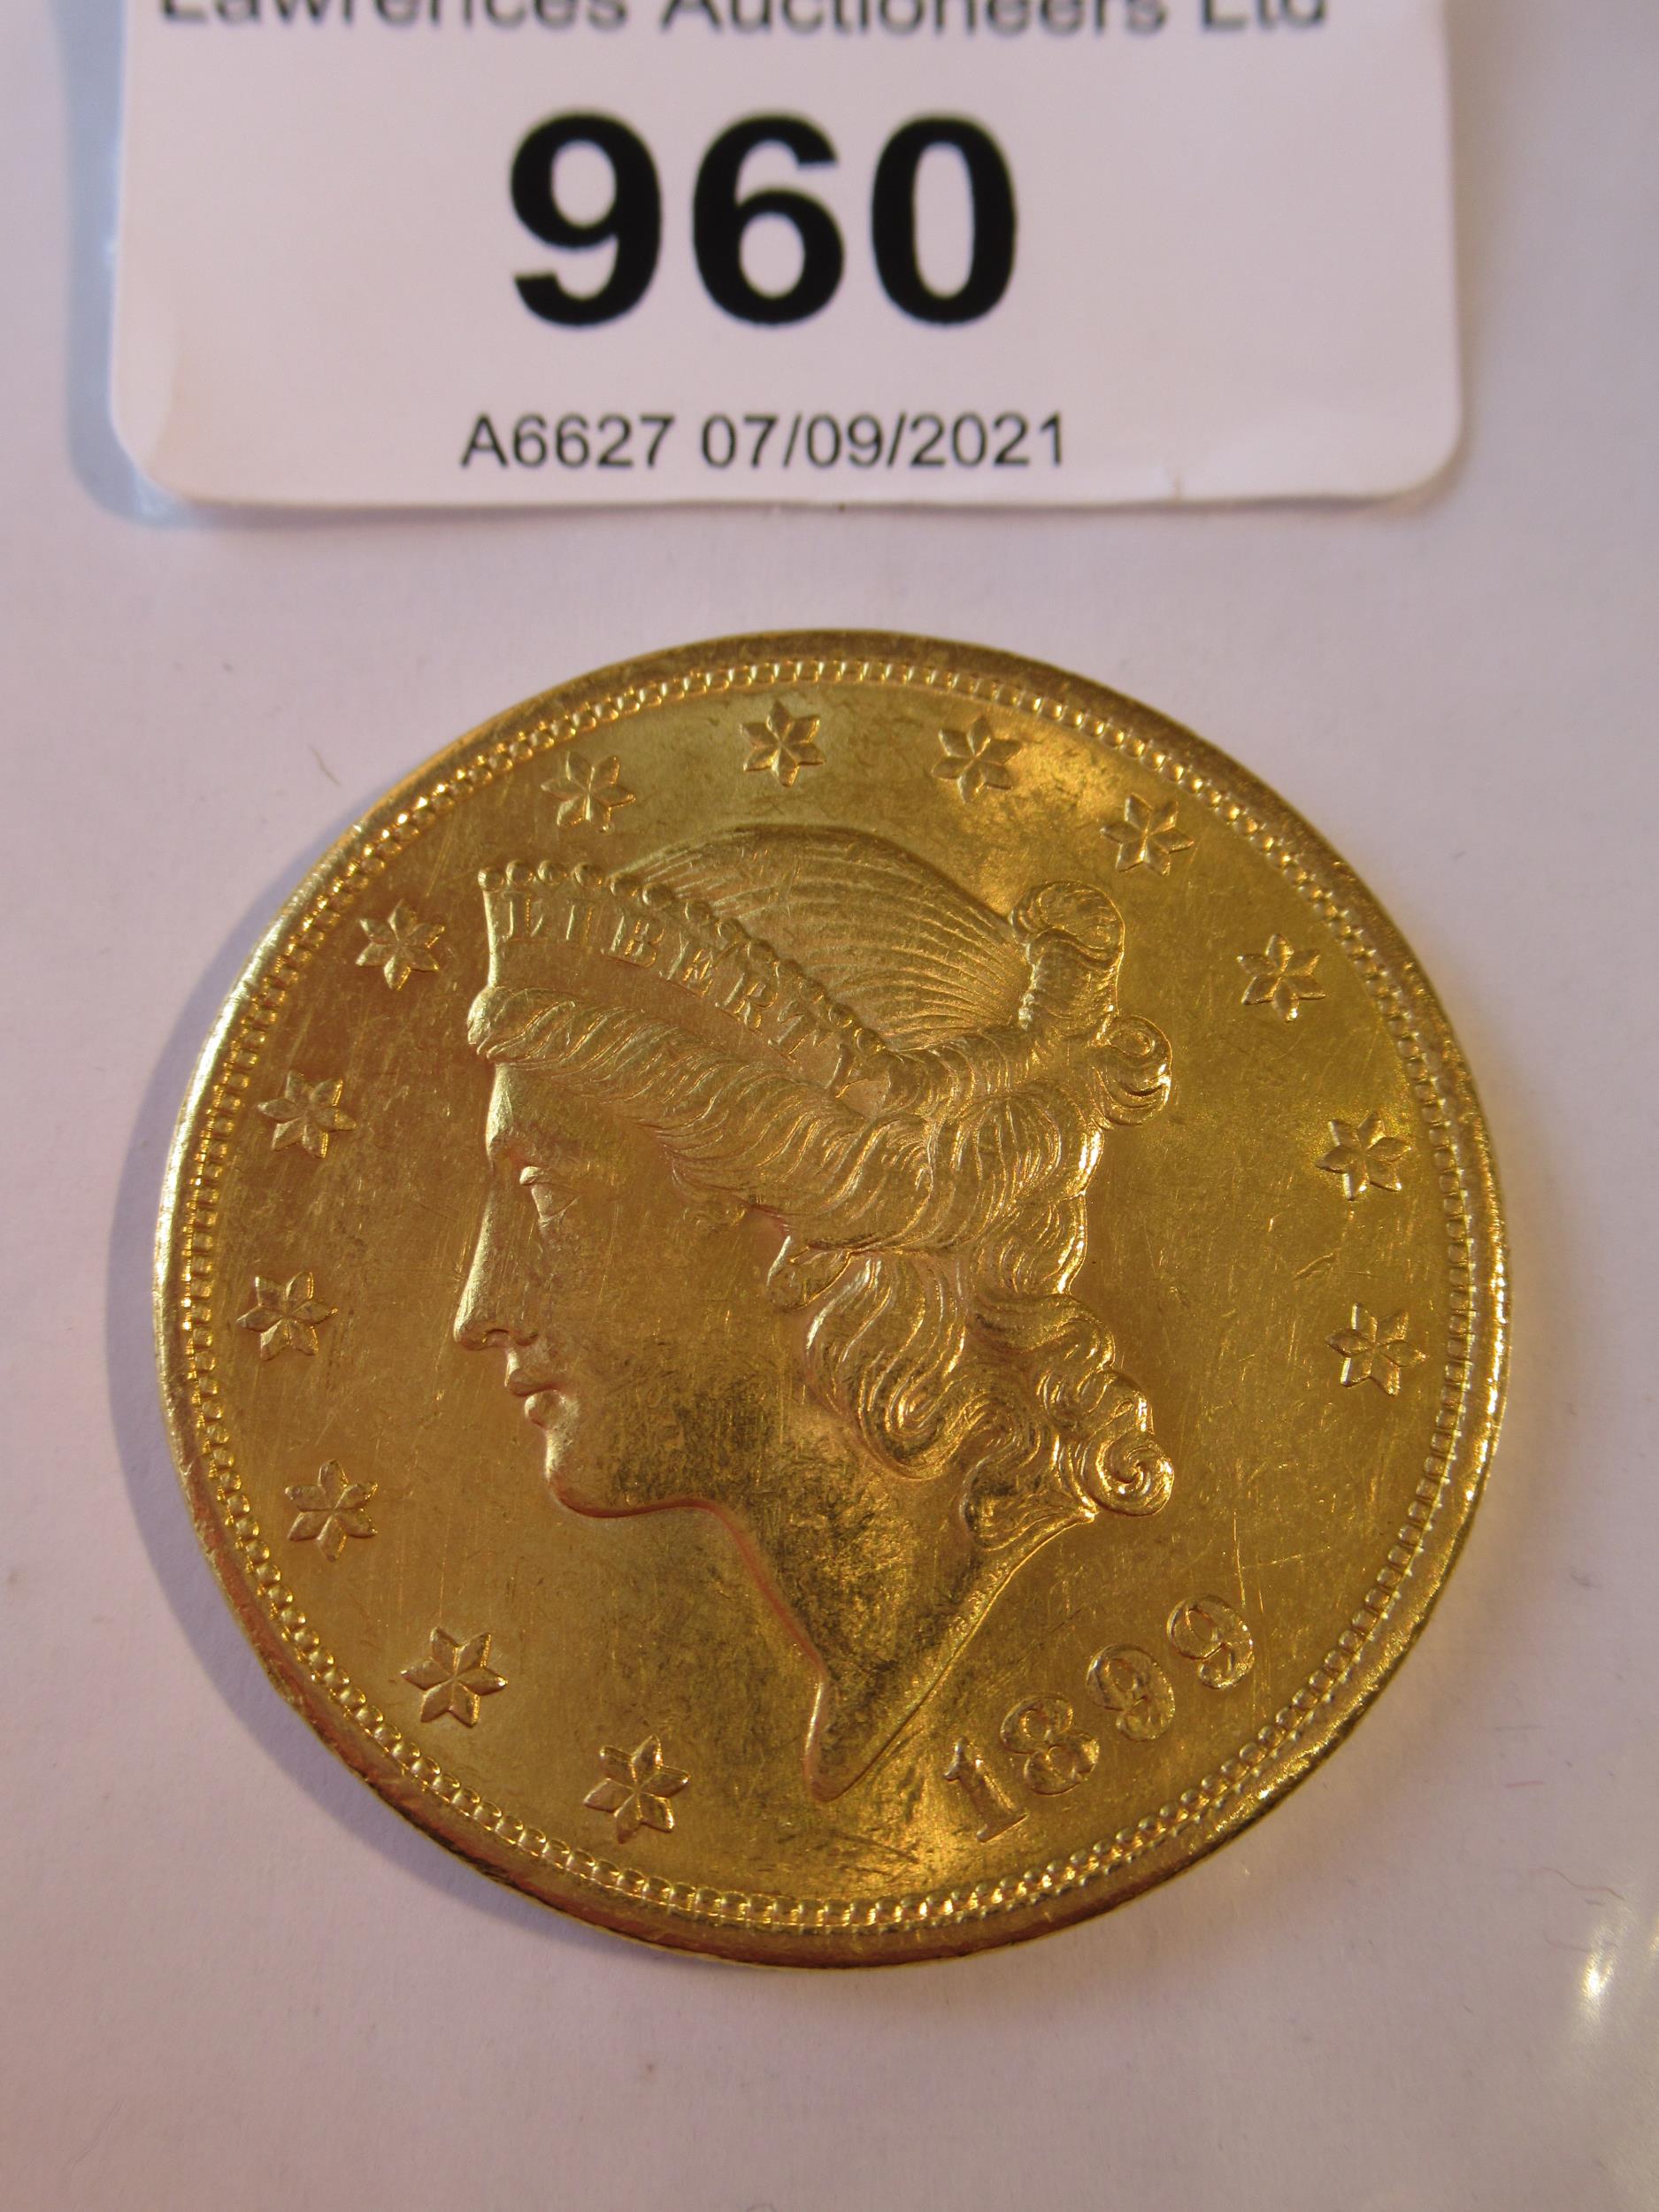 U.S.A. 1899 twenty dollar gold coin, 33g